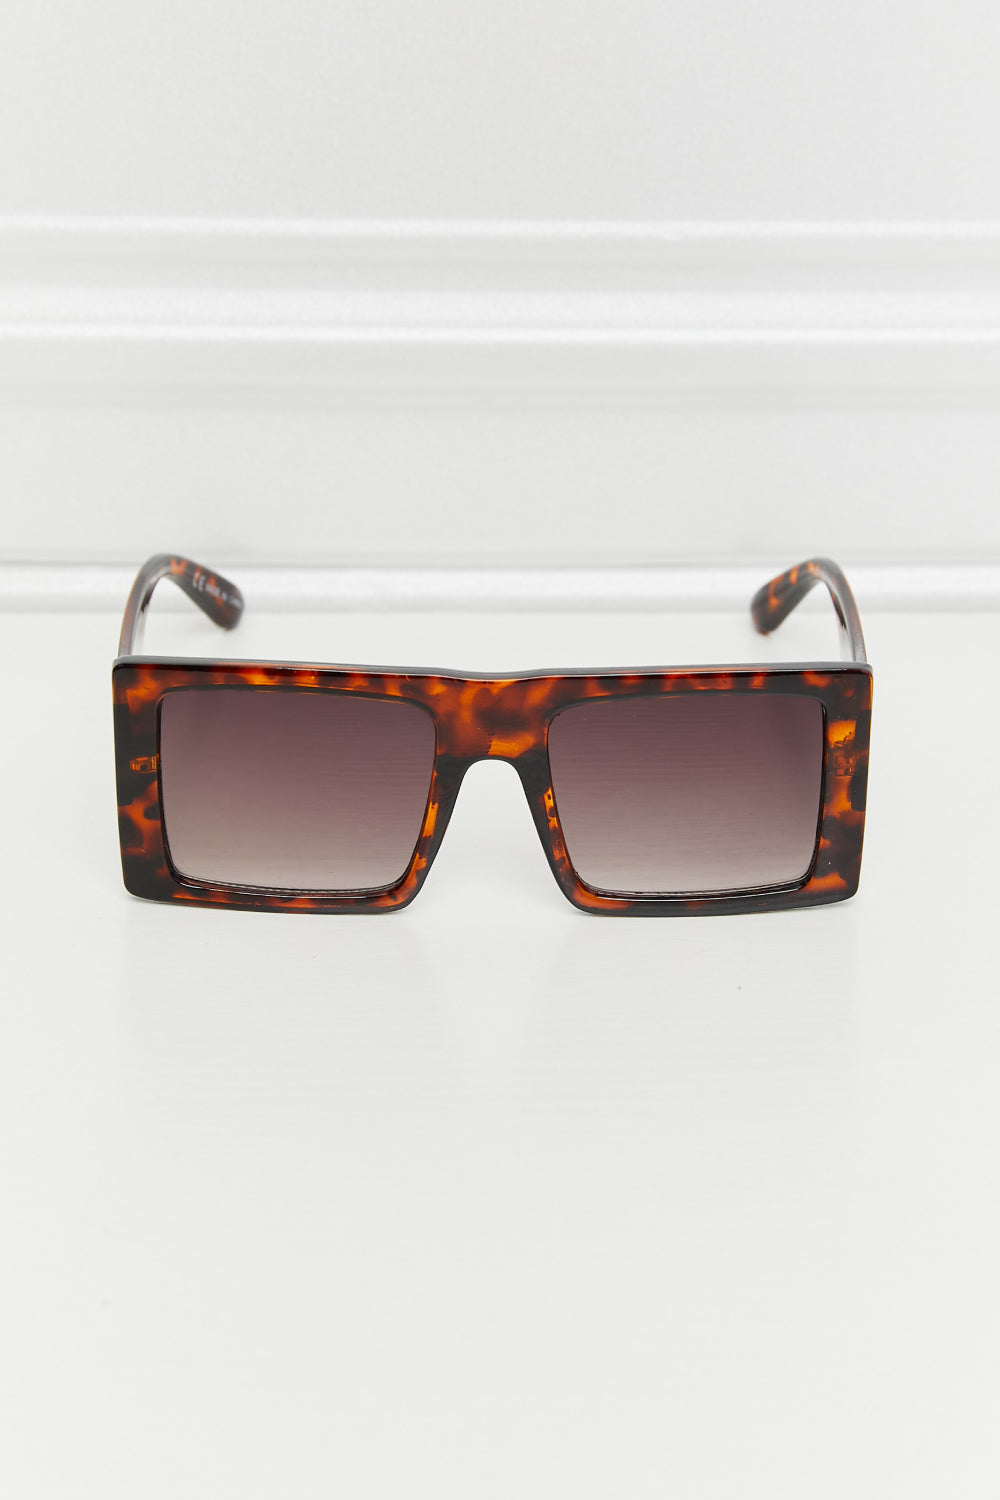 Uylee's Boutique Square Polycarbonate Sunglasses